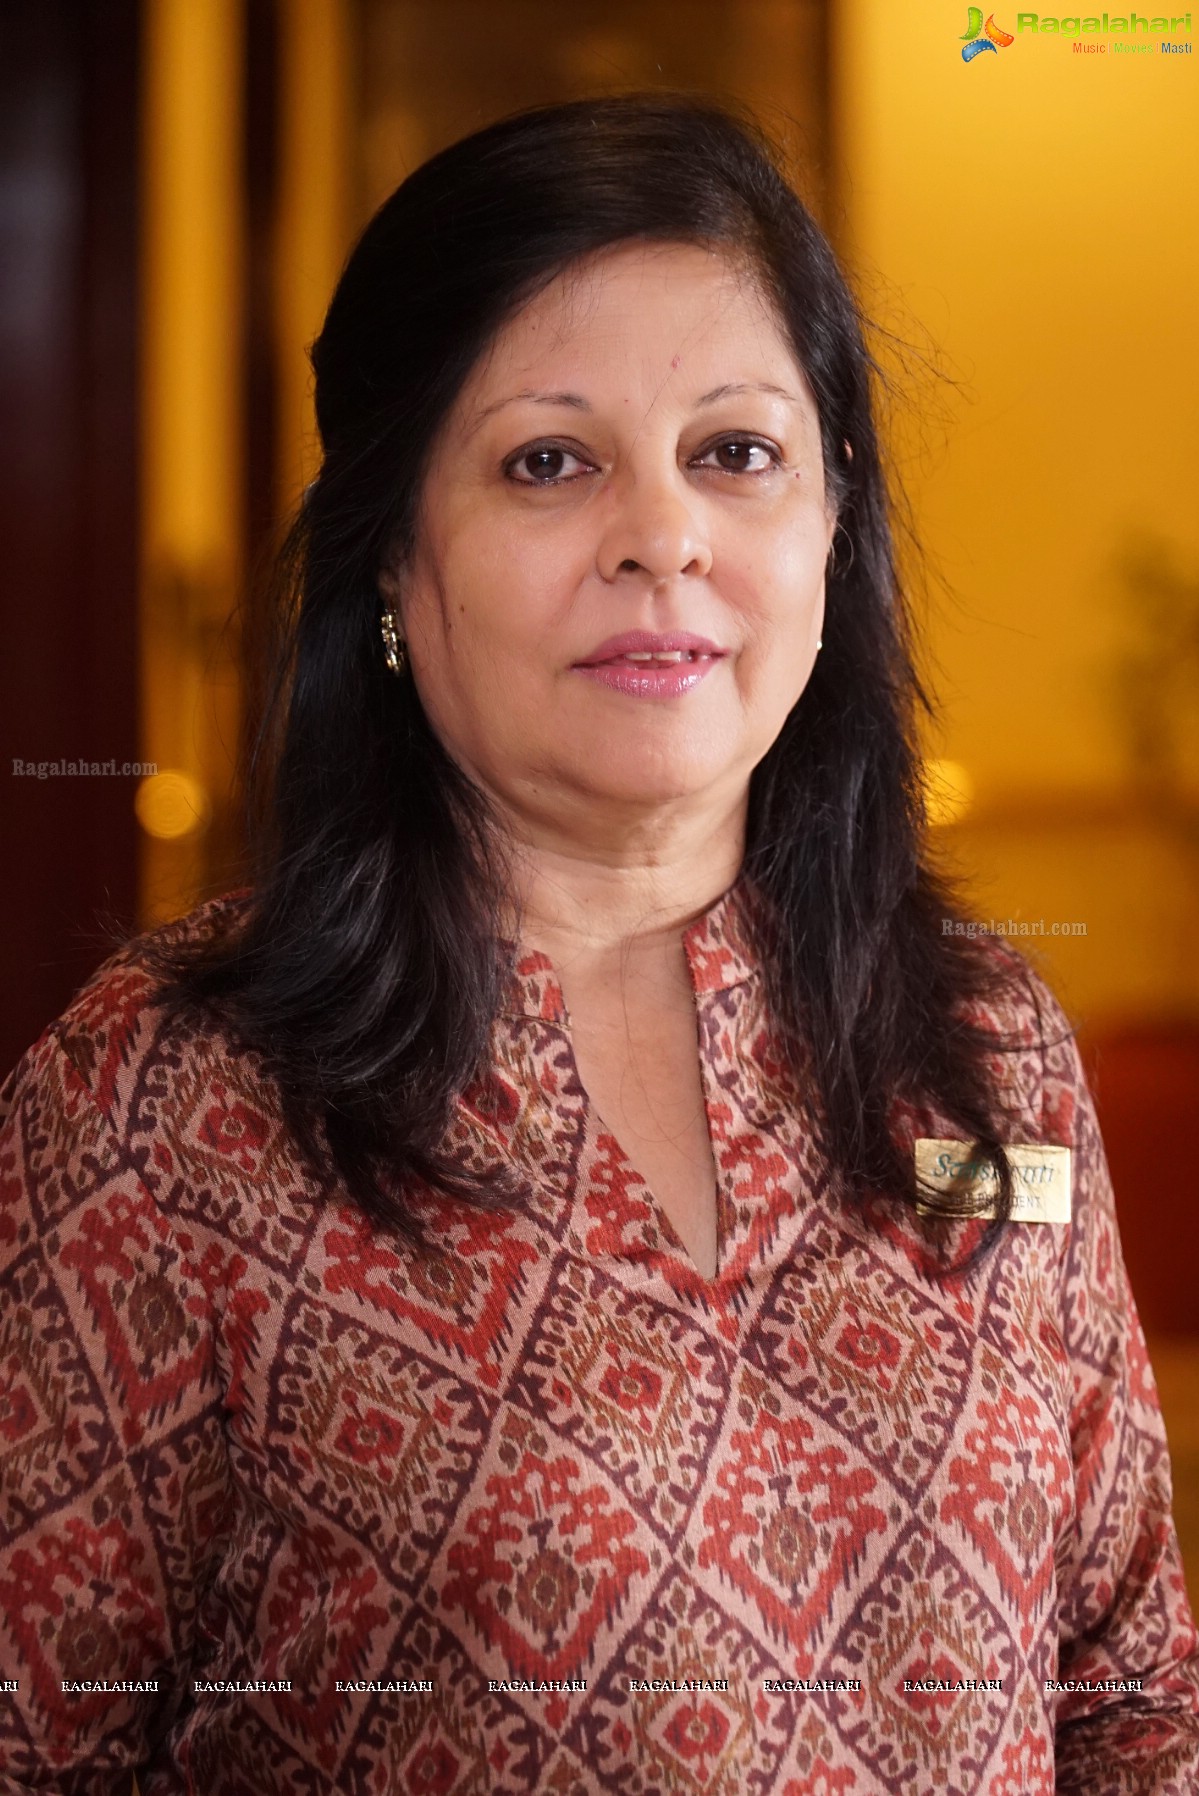 Sanskruti Presents Home and Garden - A Talk by Ms. Supraja Rao